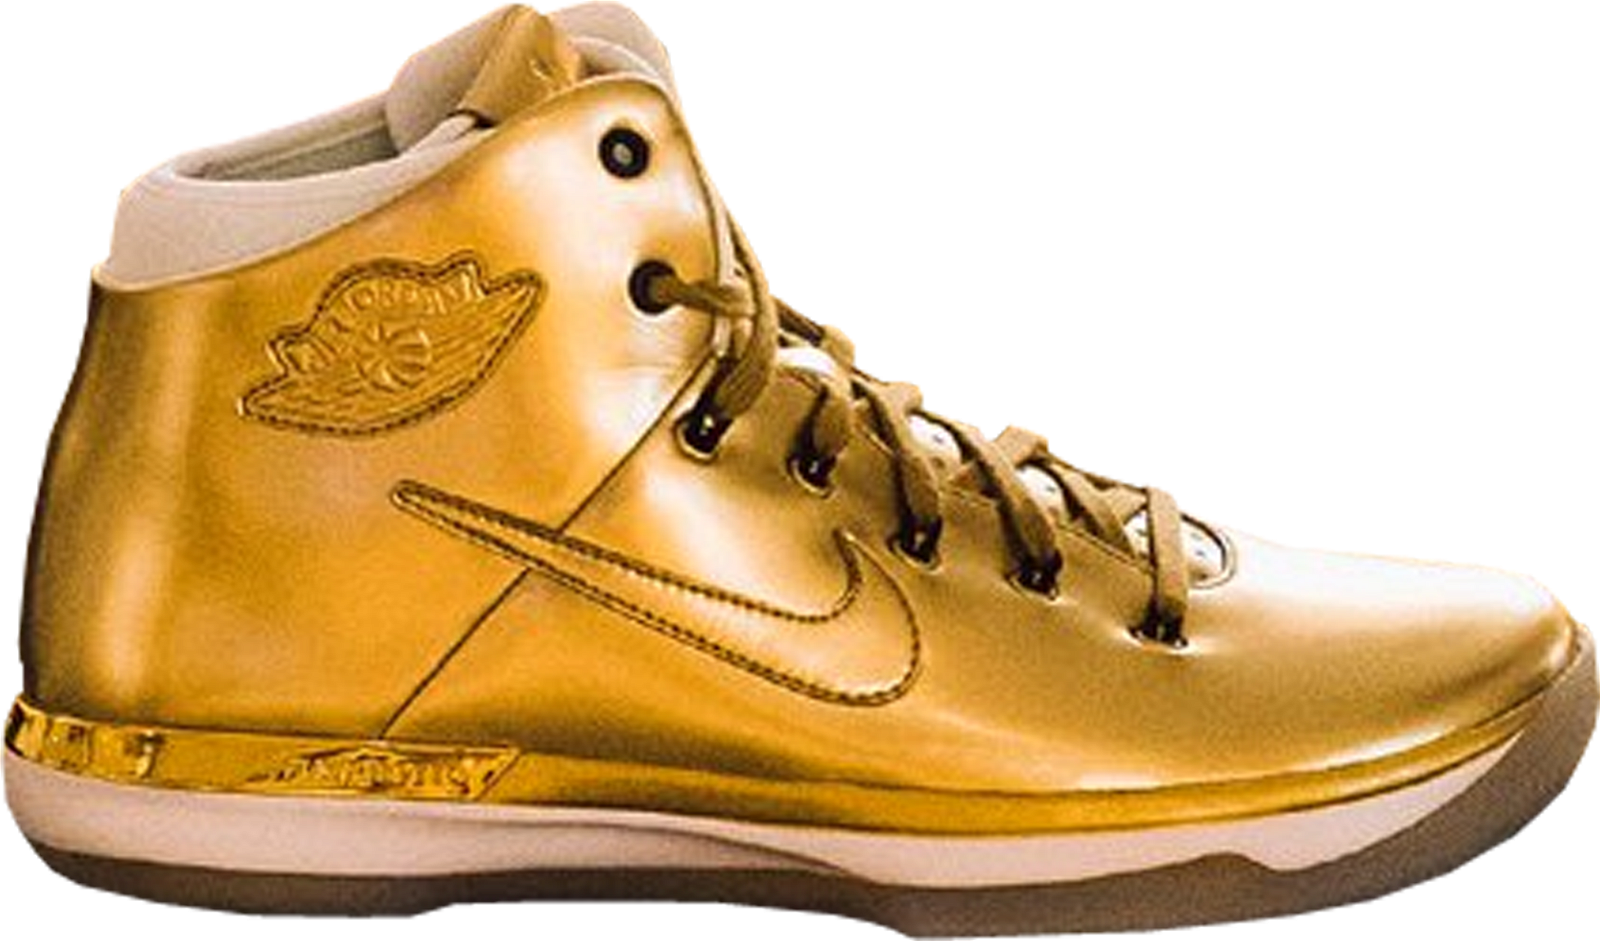 Jordan XXX1 Gold All Star (2017) sneaker informations